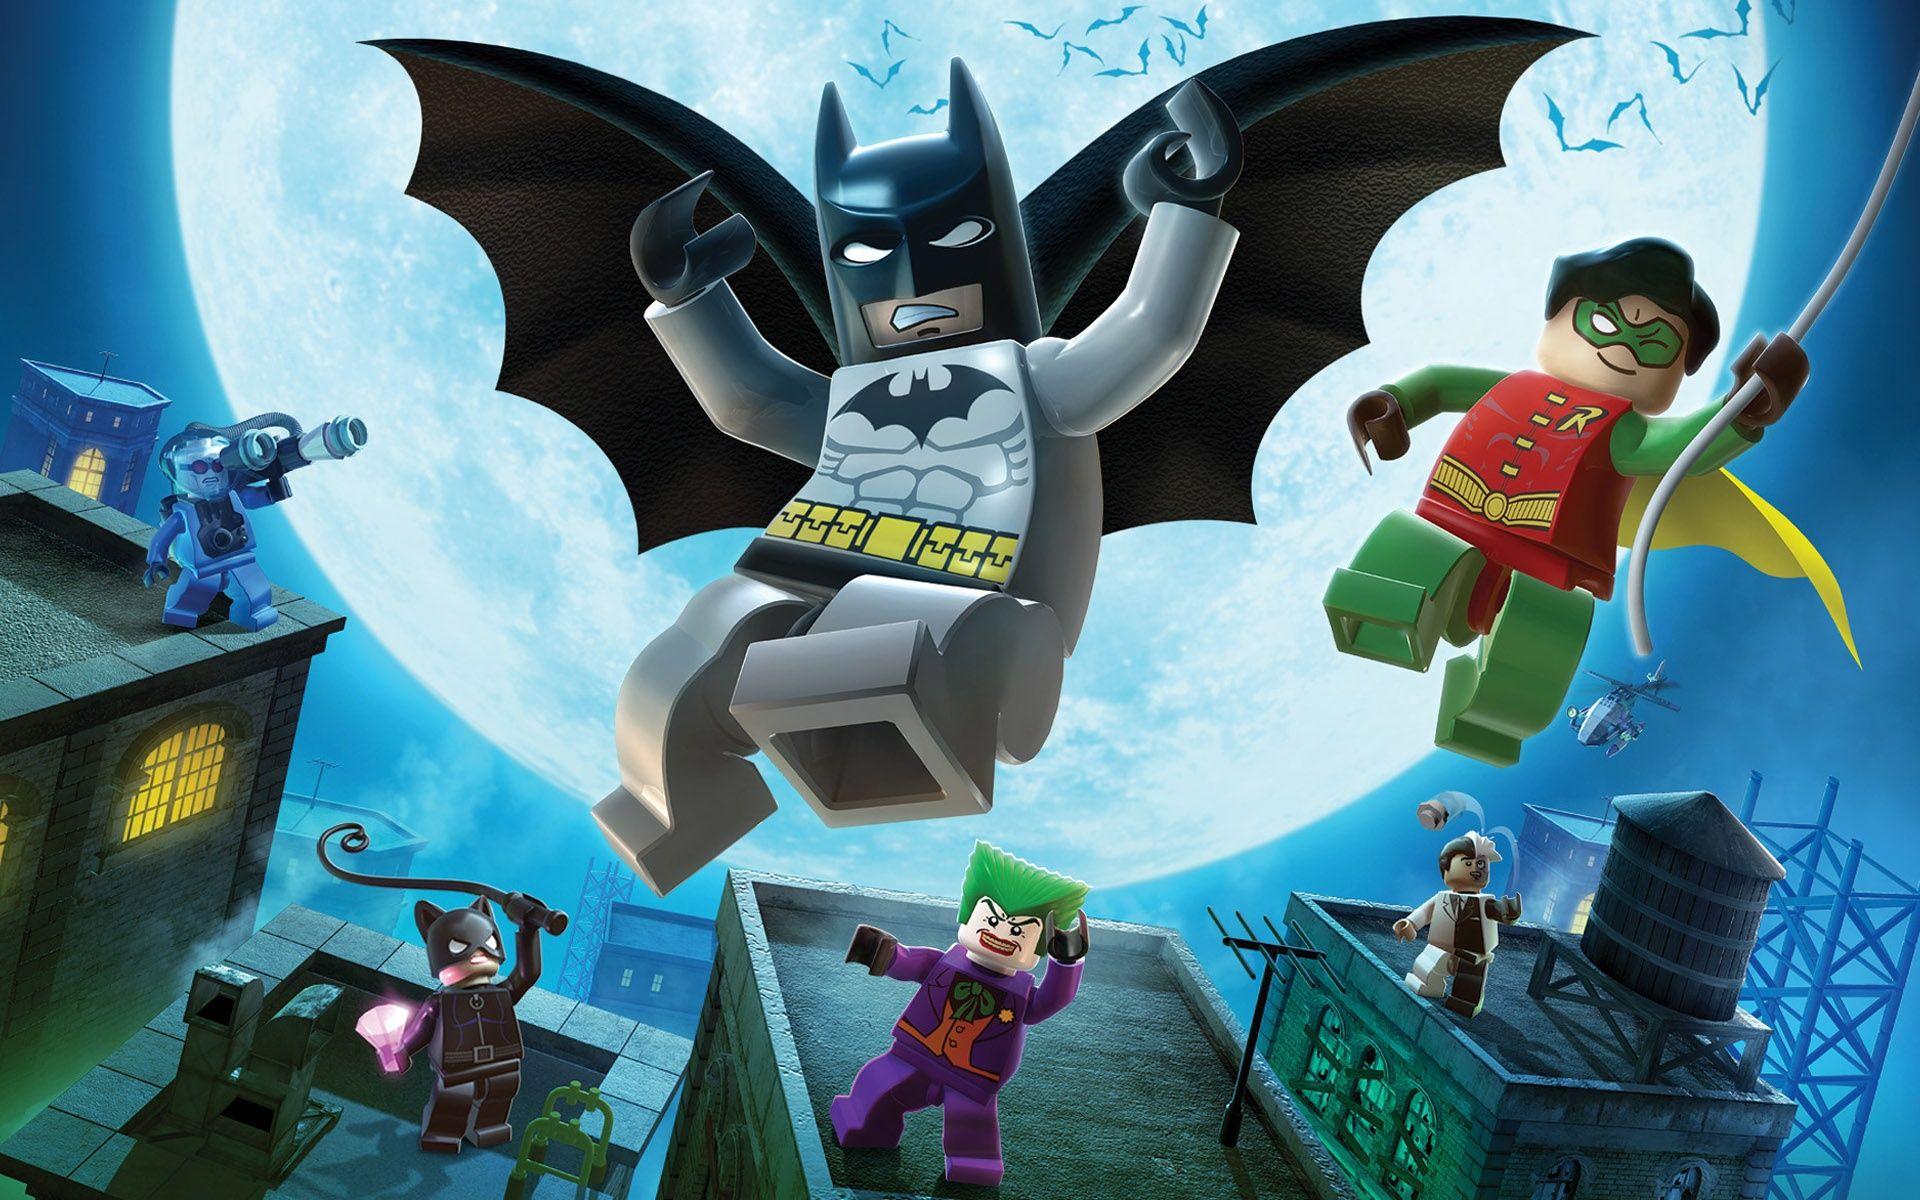 LEGO Batman Game Wallpaper in jpg format for free download